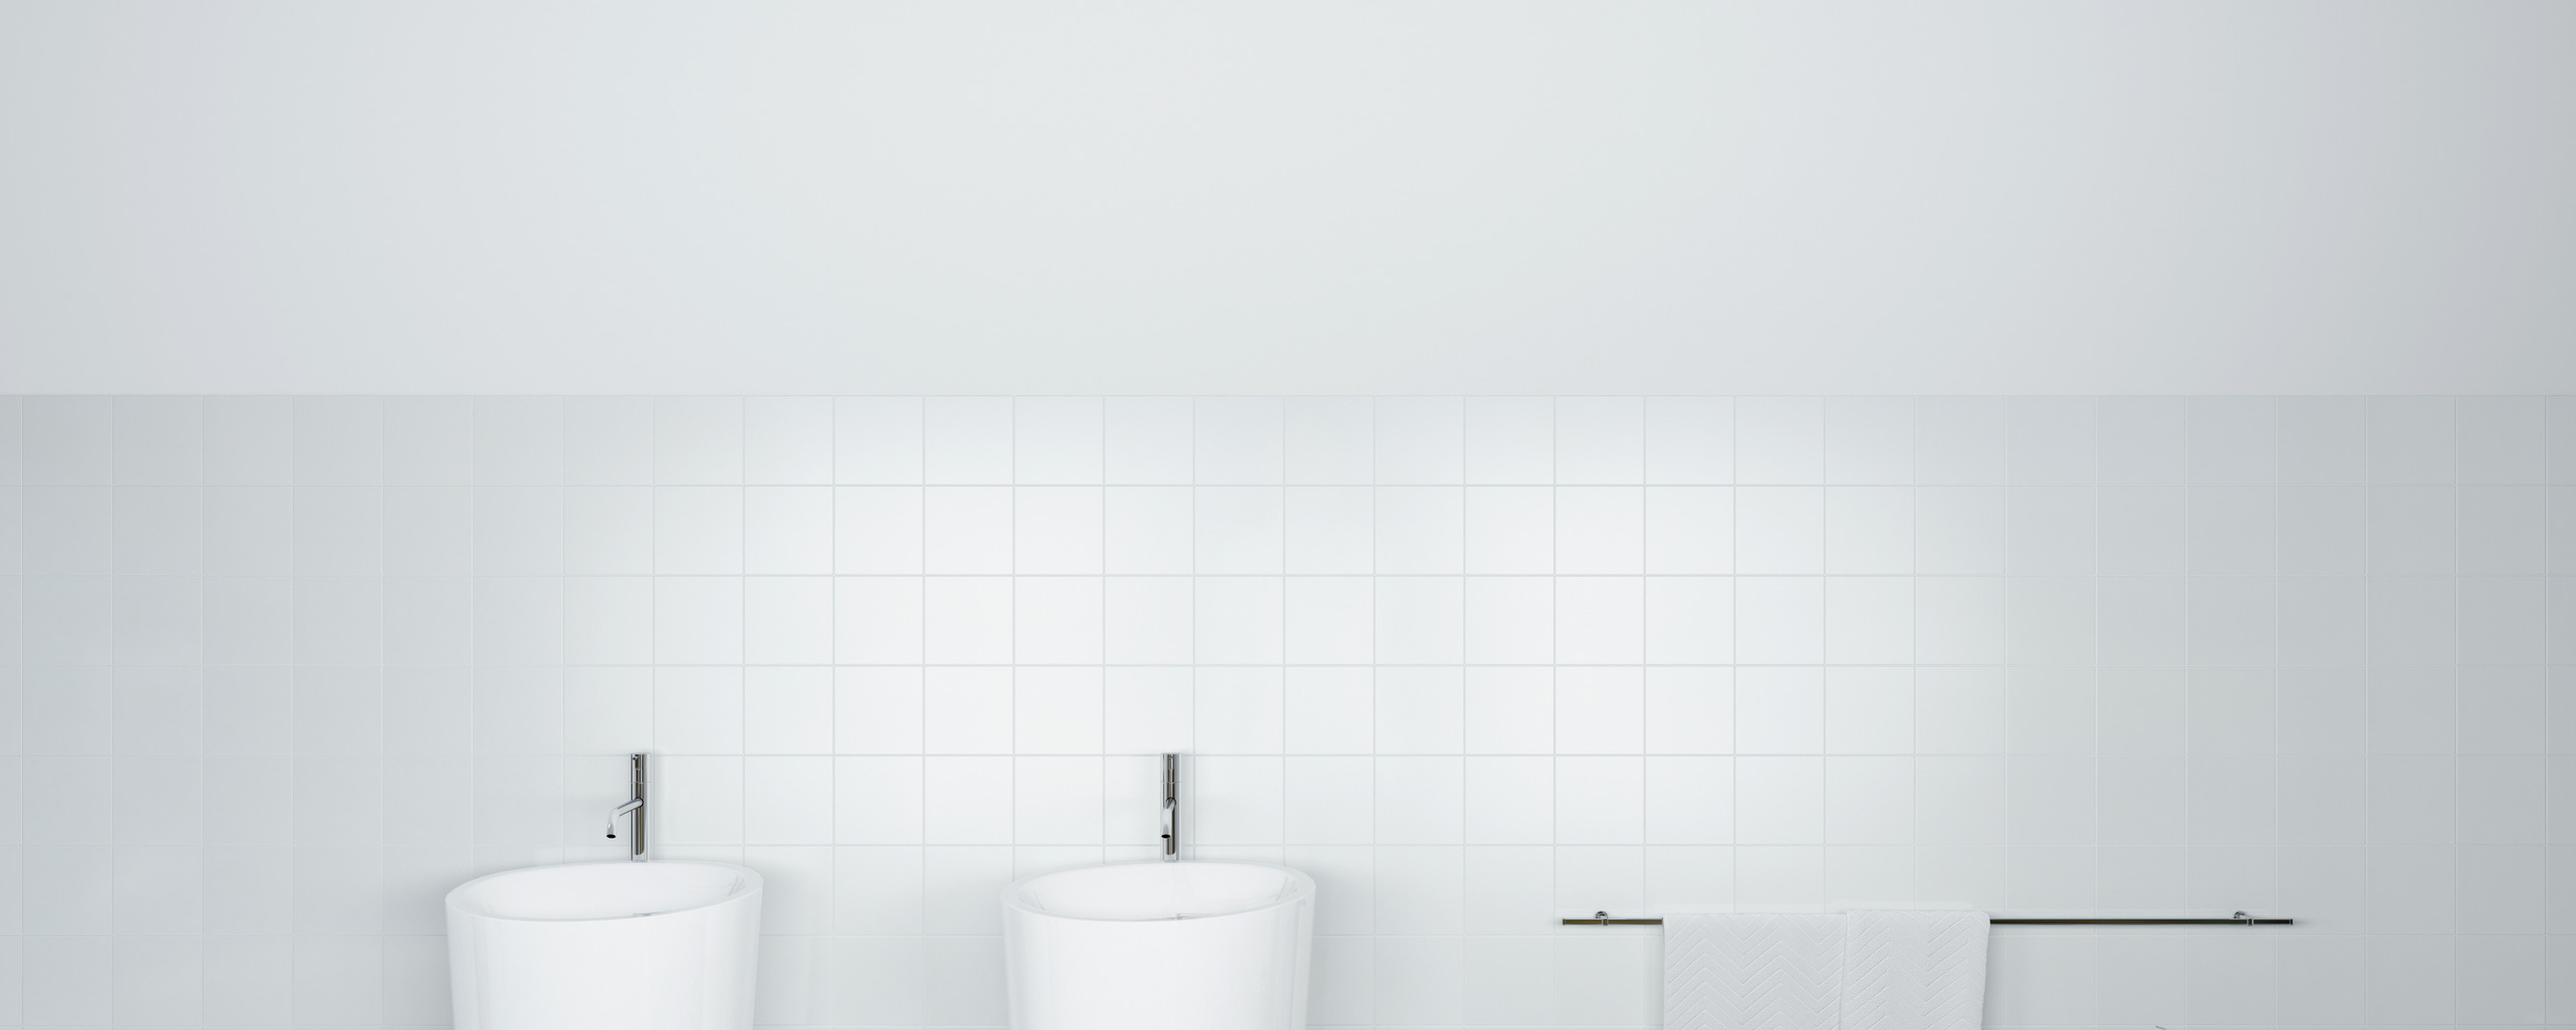 Airy bathroom with wall mounted wash basins